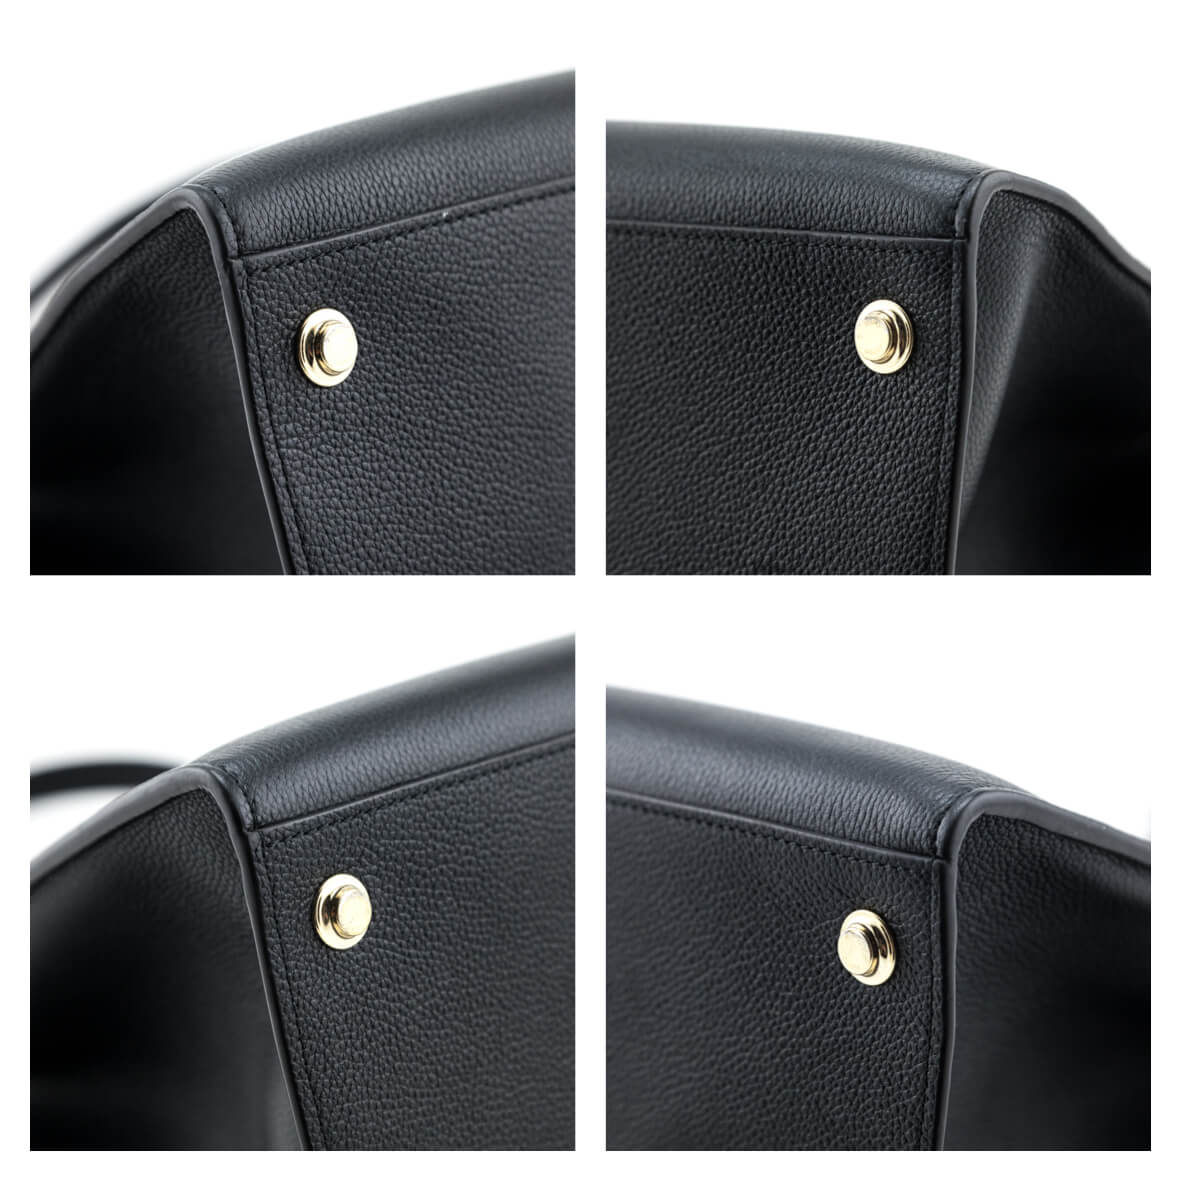 Louis Vuitton Black Taurillon City Steamer GM - Love that Bag etc - Preowned Authentic Designer Handbags & Preloved Fashions